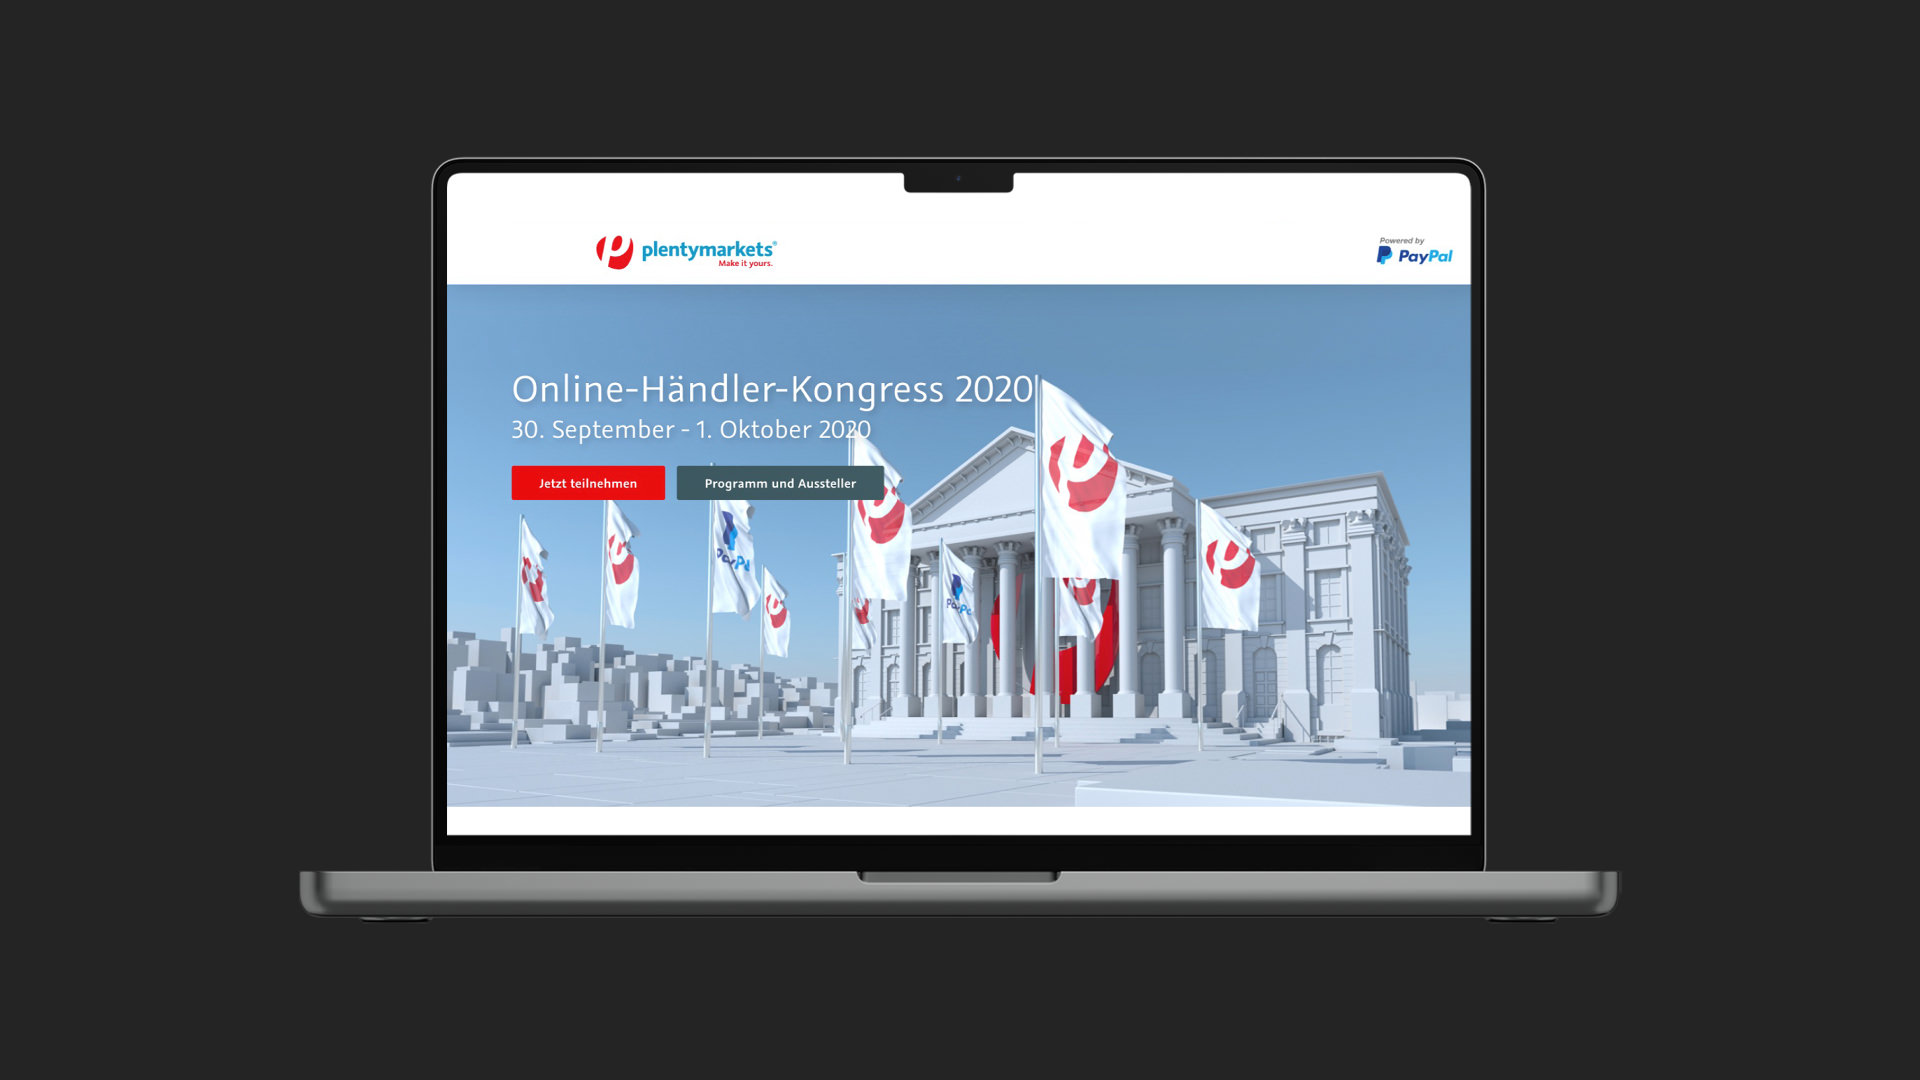 PlentyMarkets OHK 2020 Website